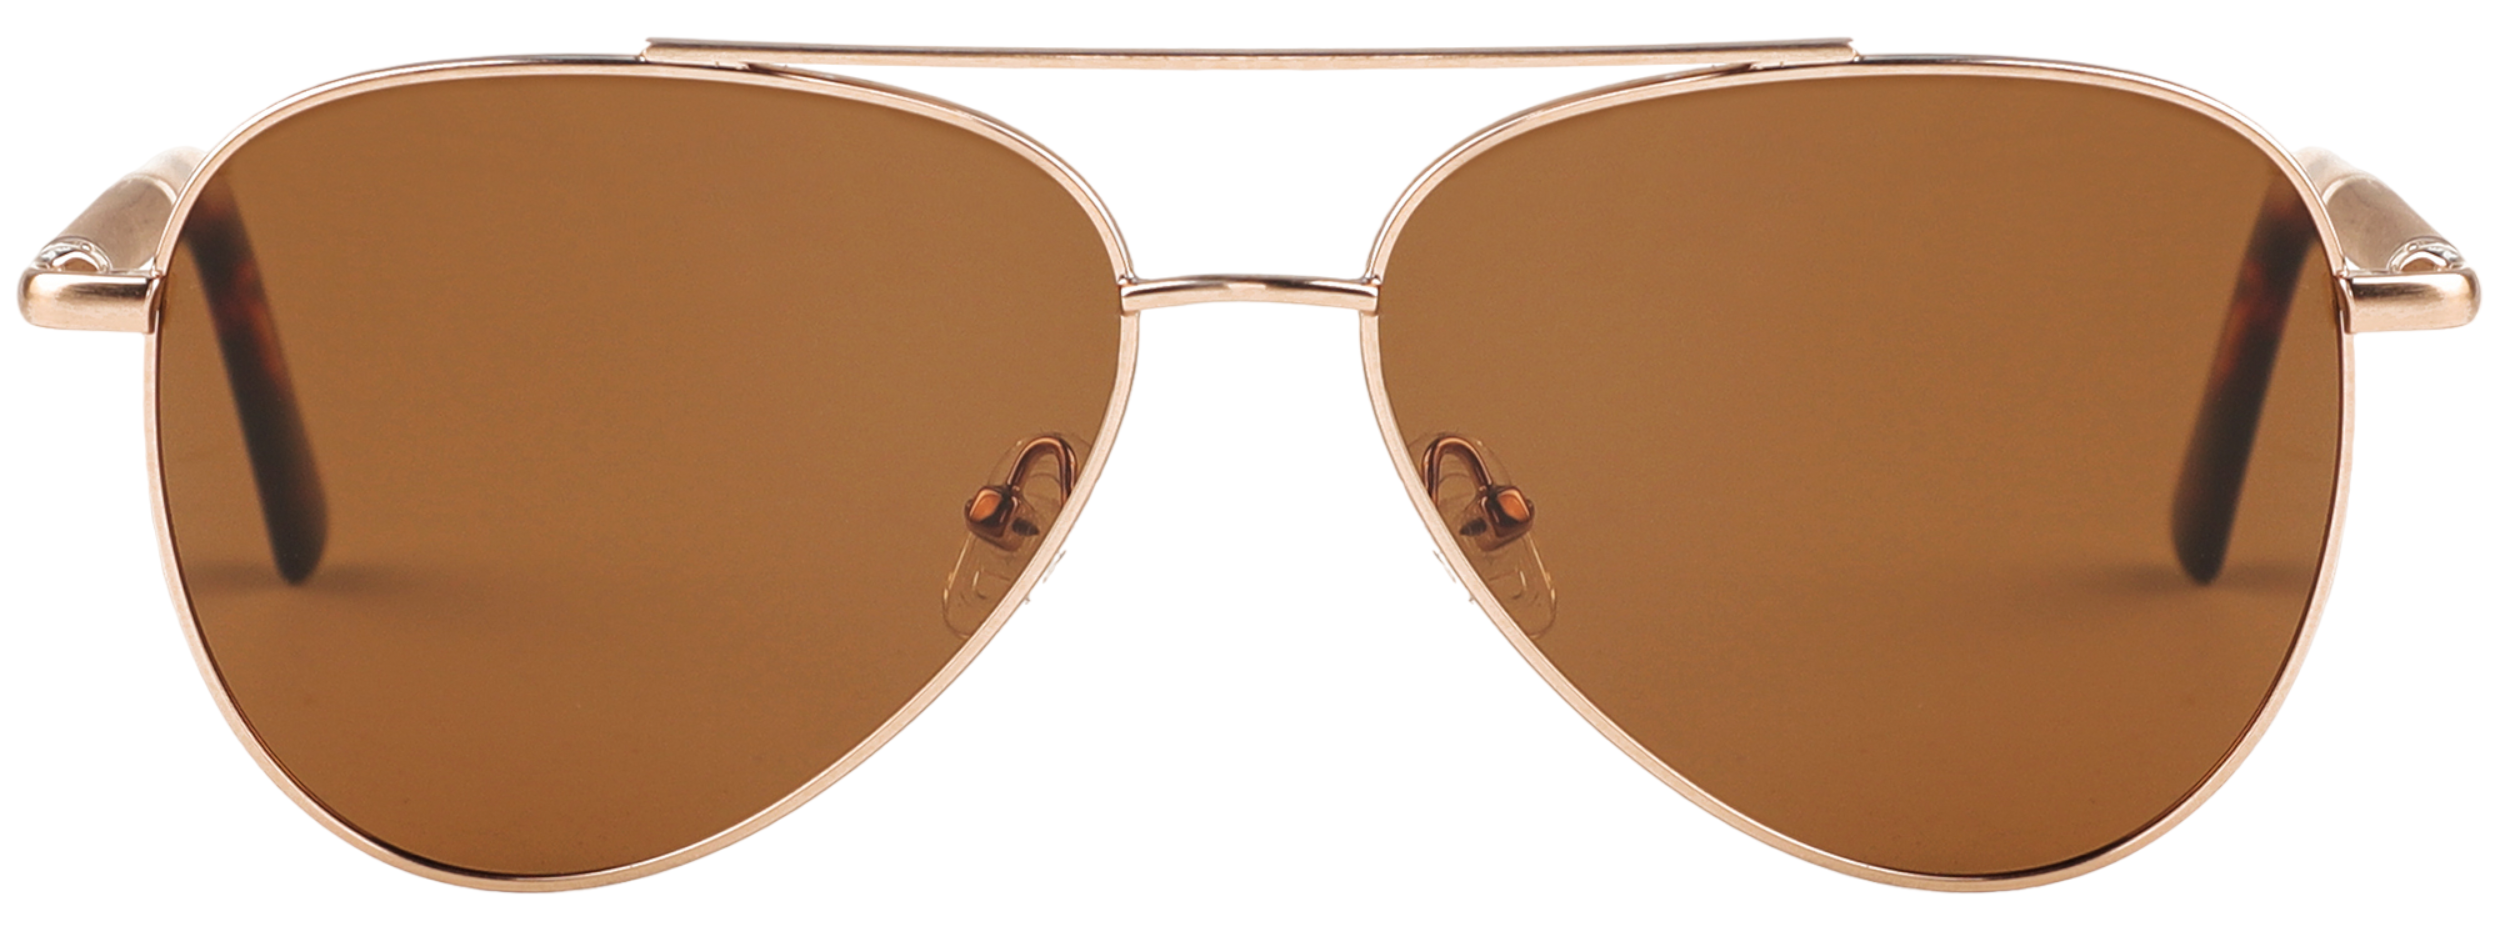 Spitfire Sunglasses